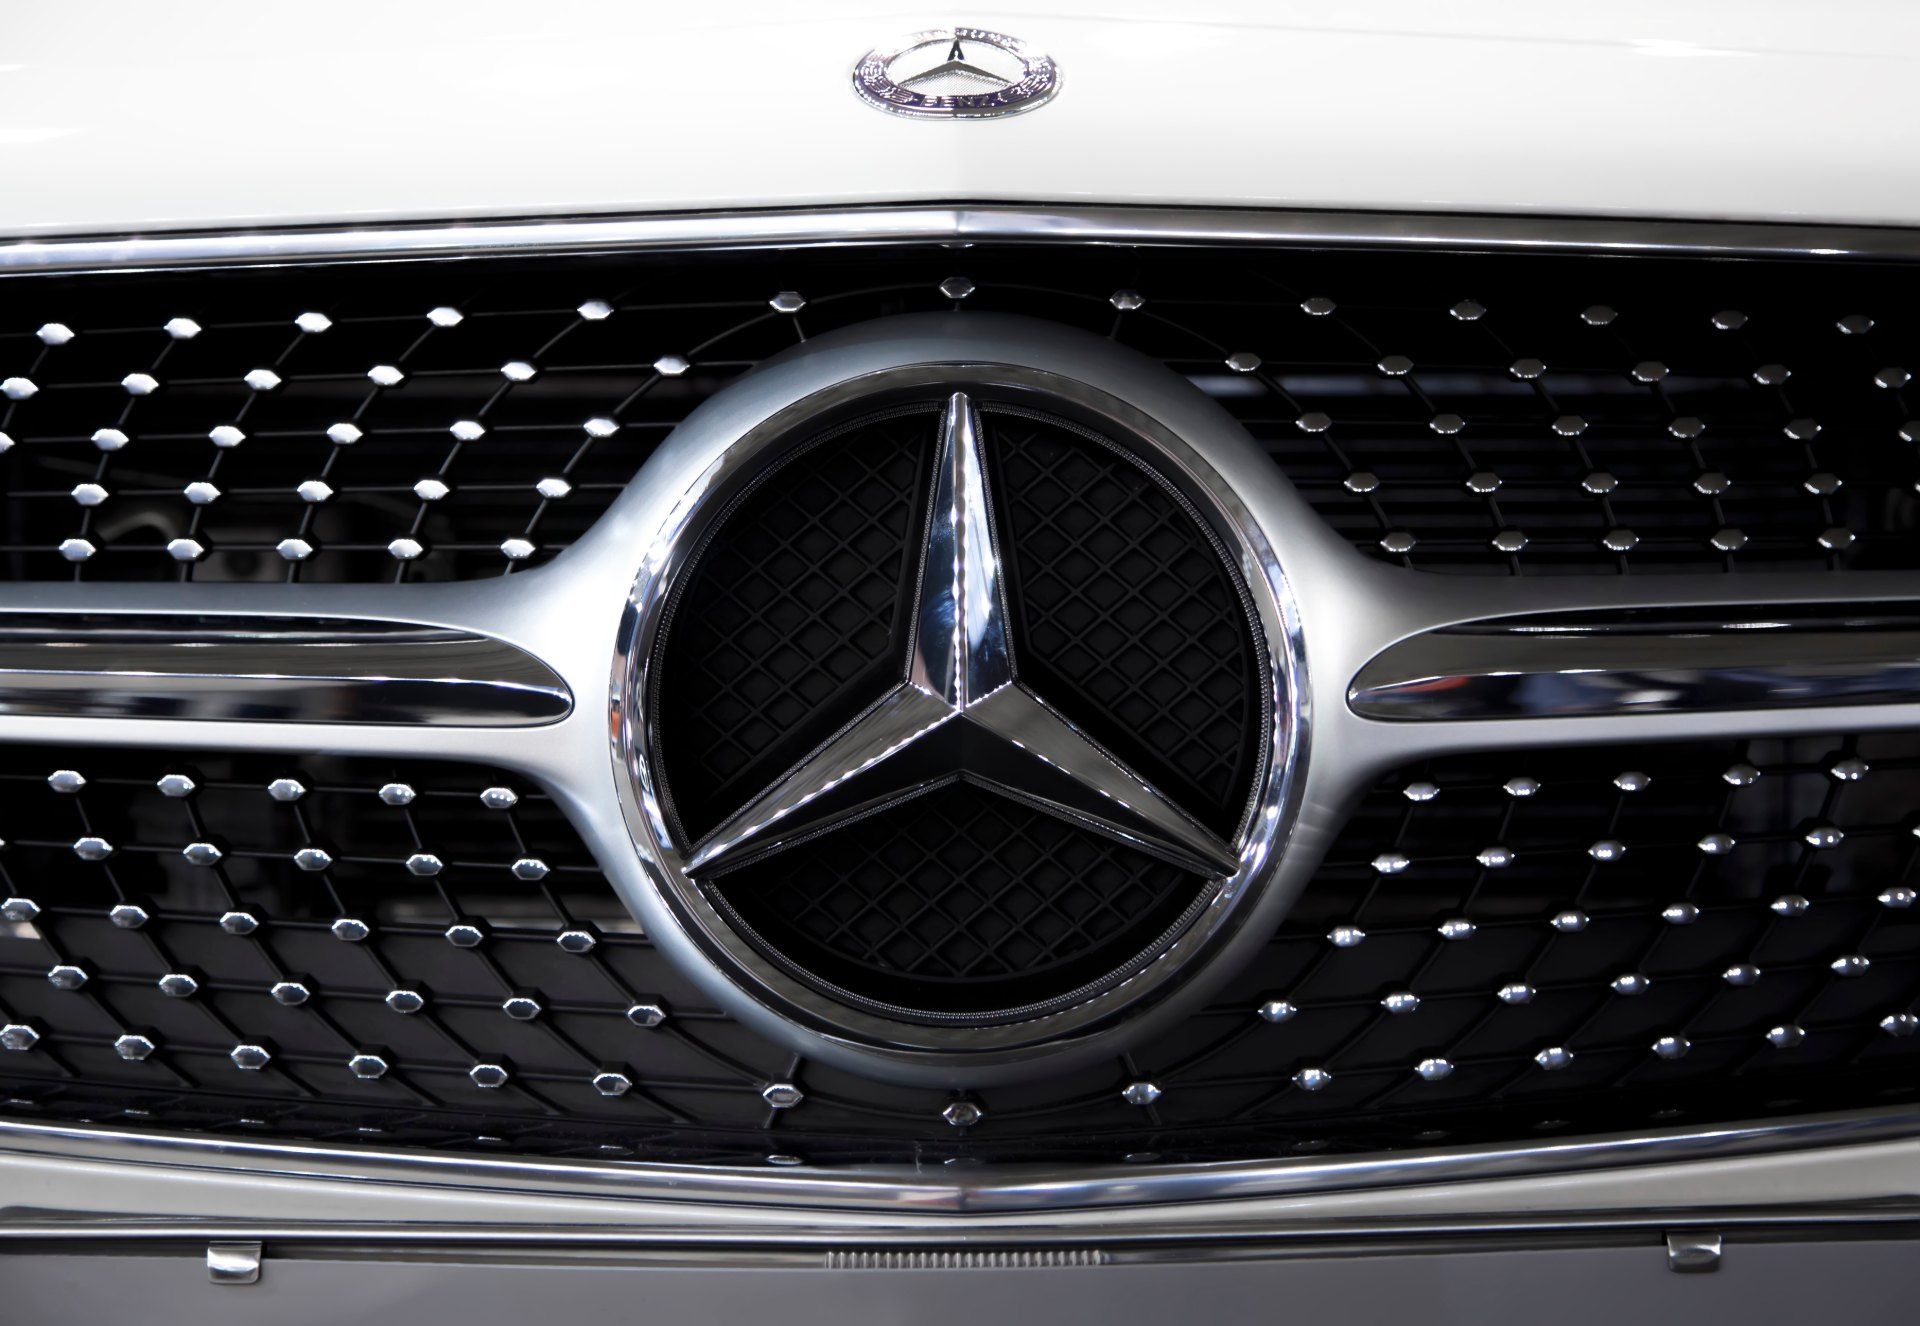 Mercedes logo on car grille - Mercedes group action